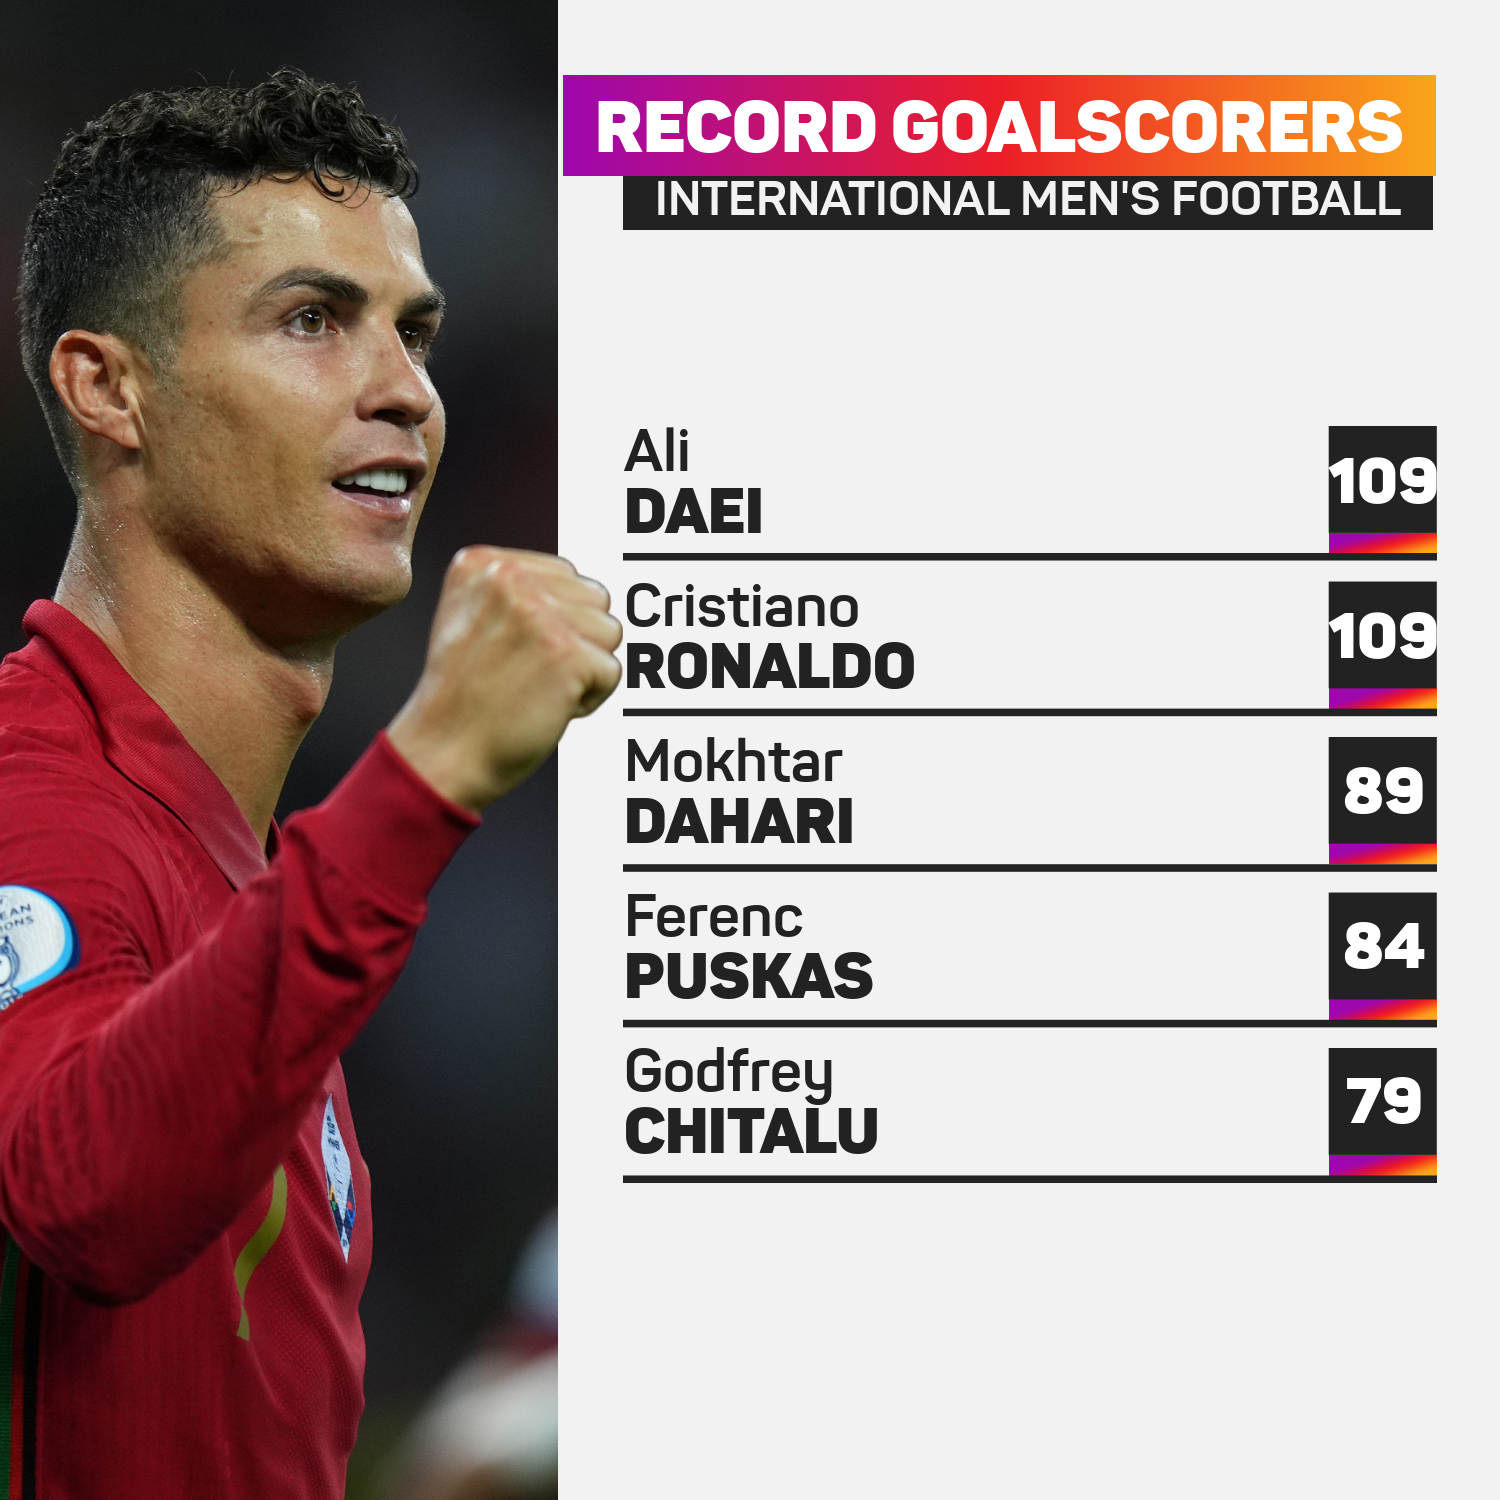 Record international goalscorers